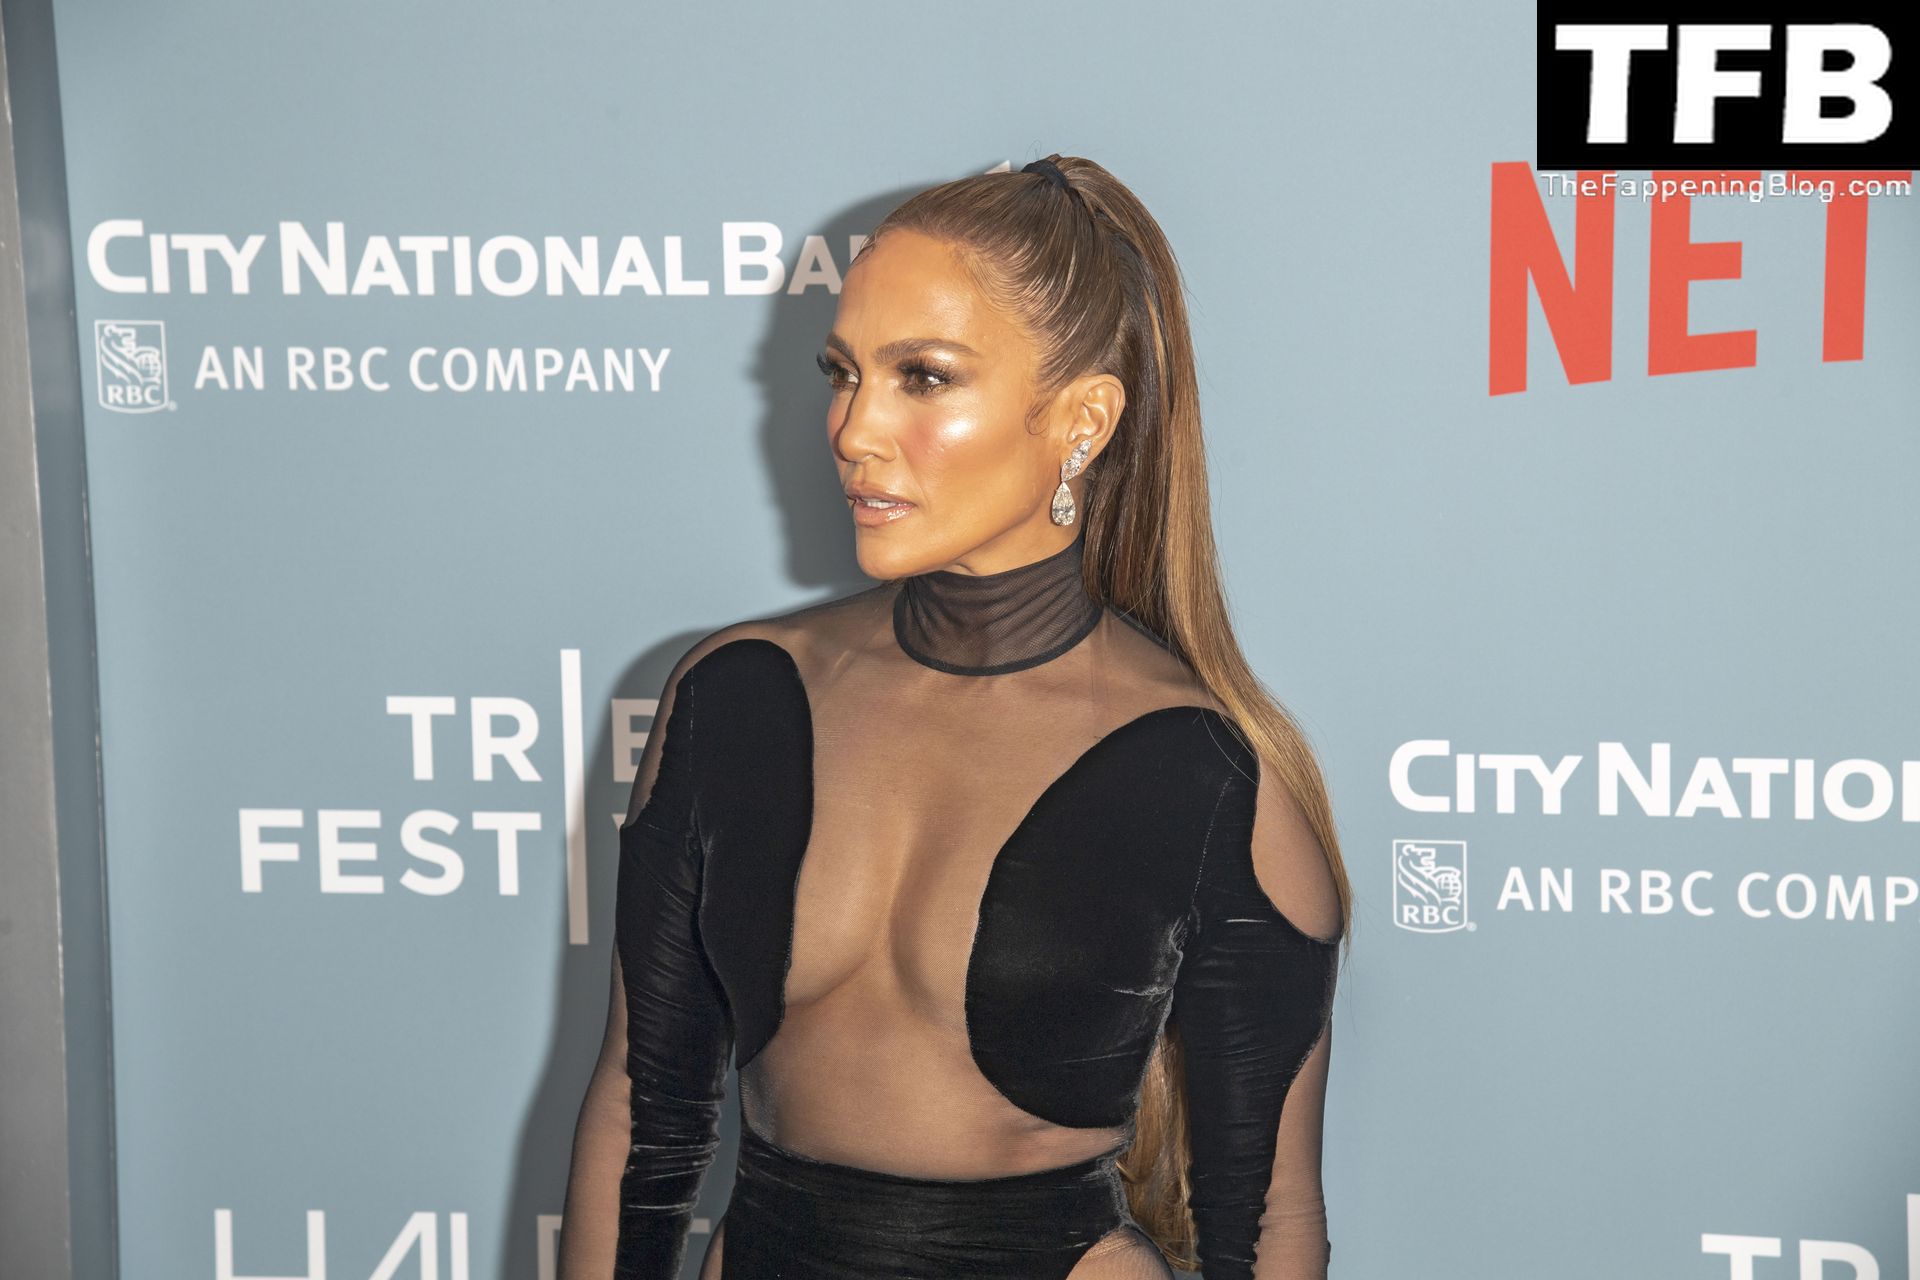 Jennifer-Lopez-Sexy-The-Fappening-Blog-74-1.jpg